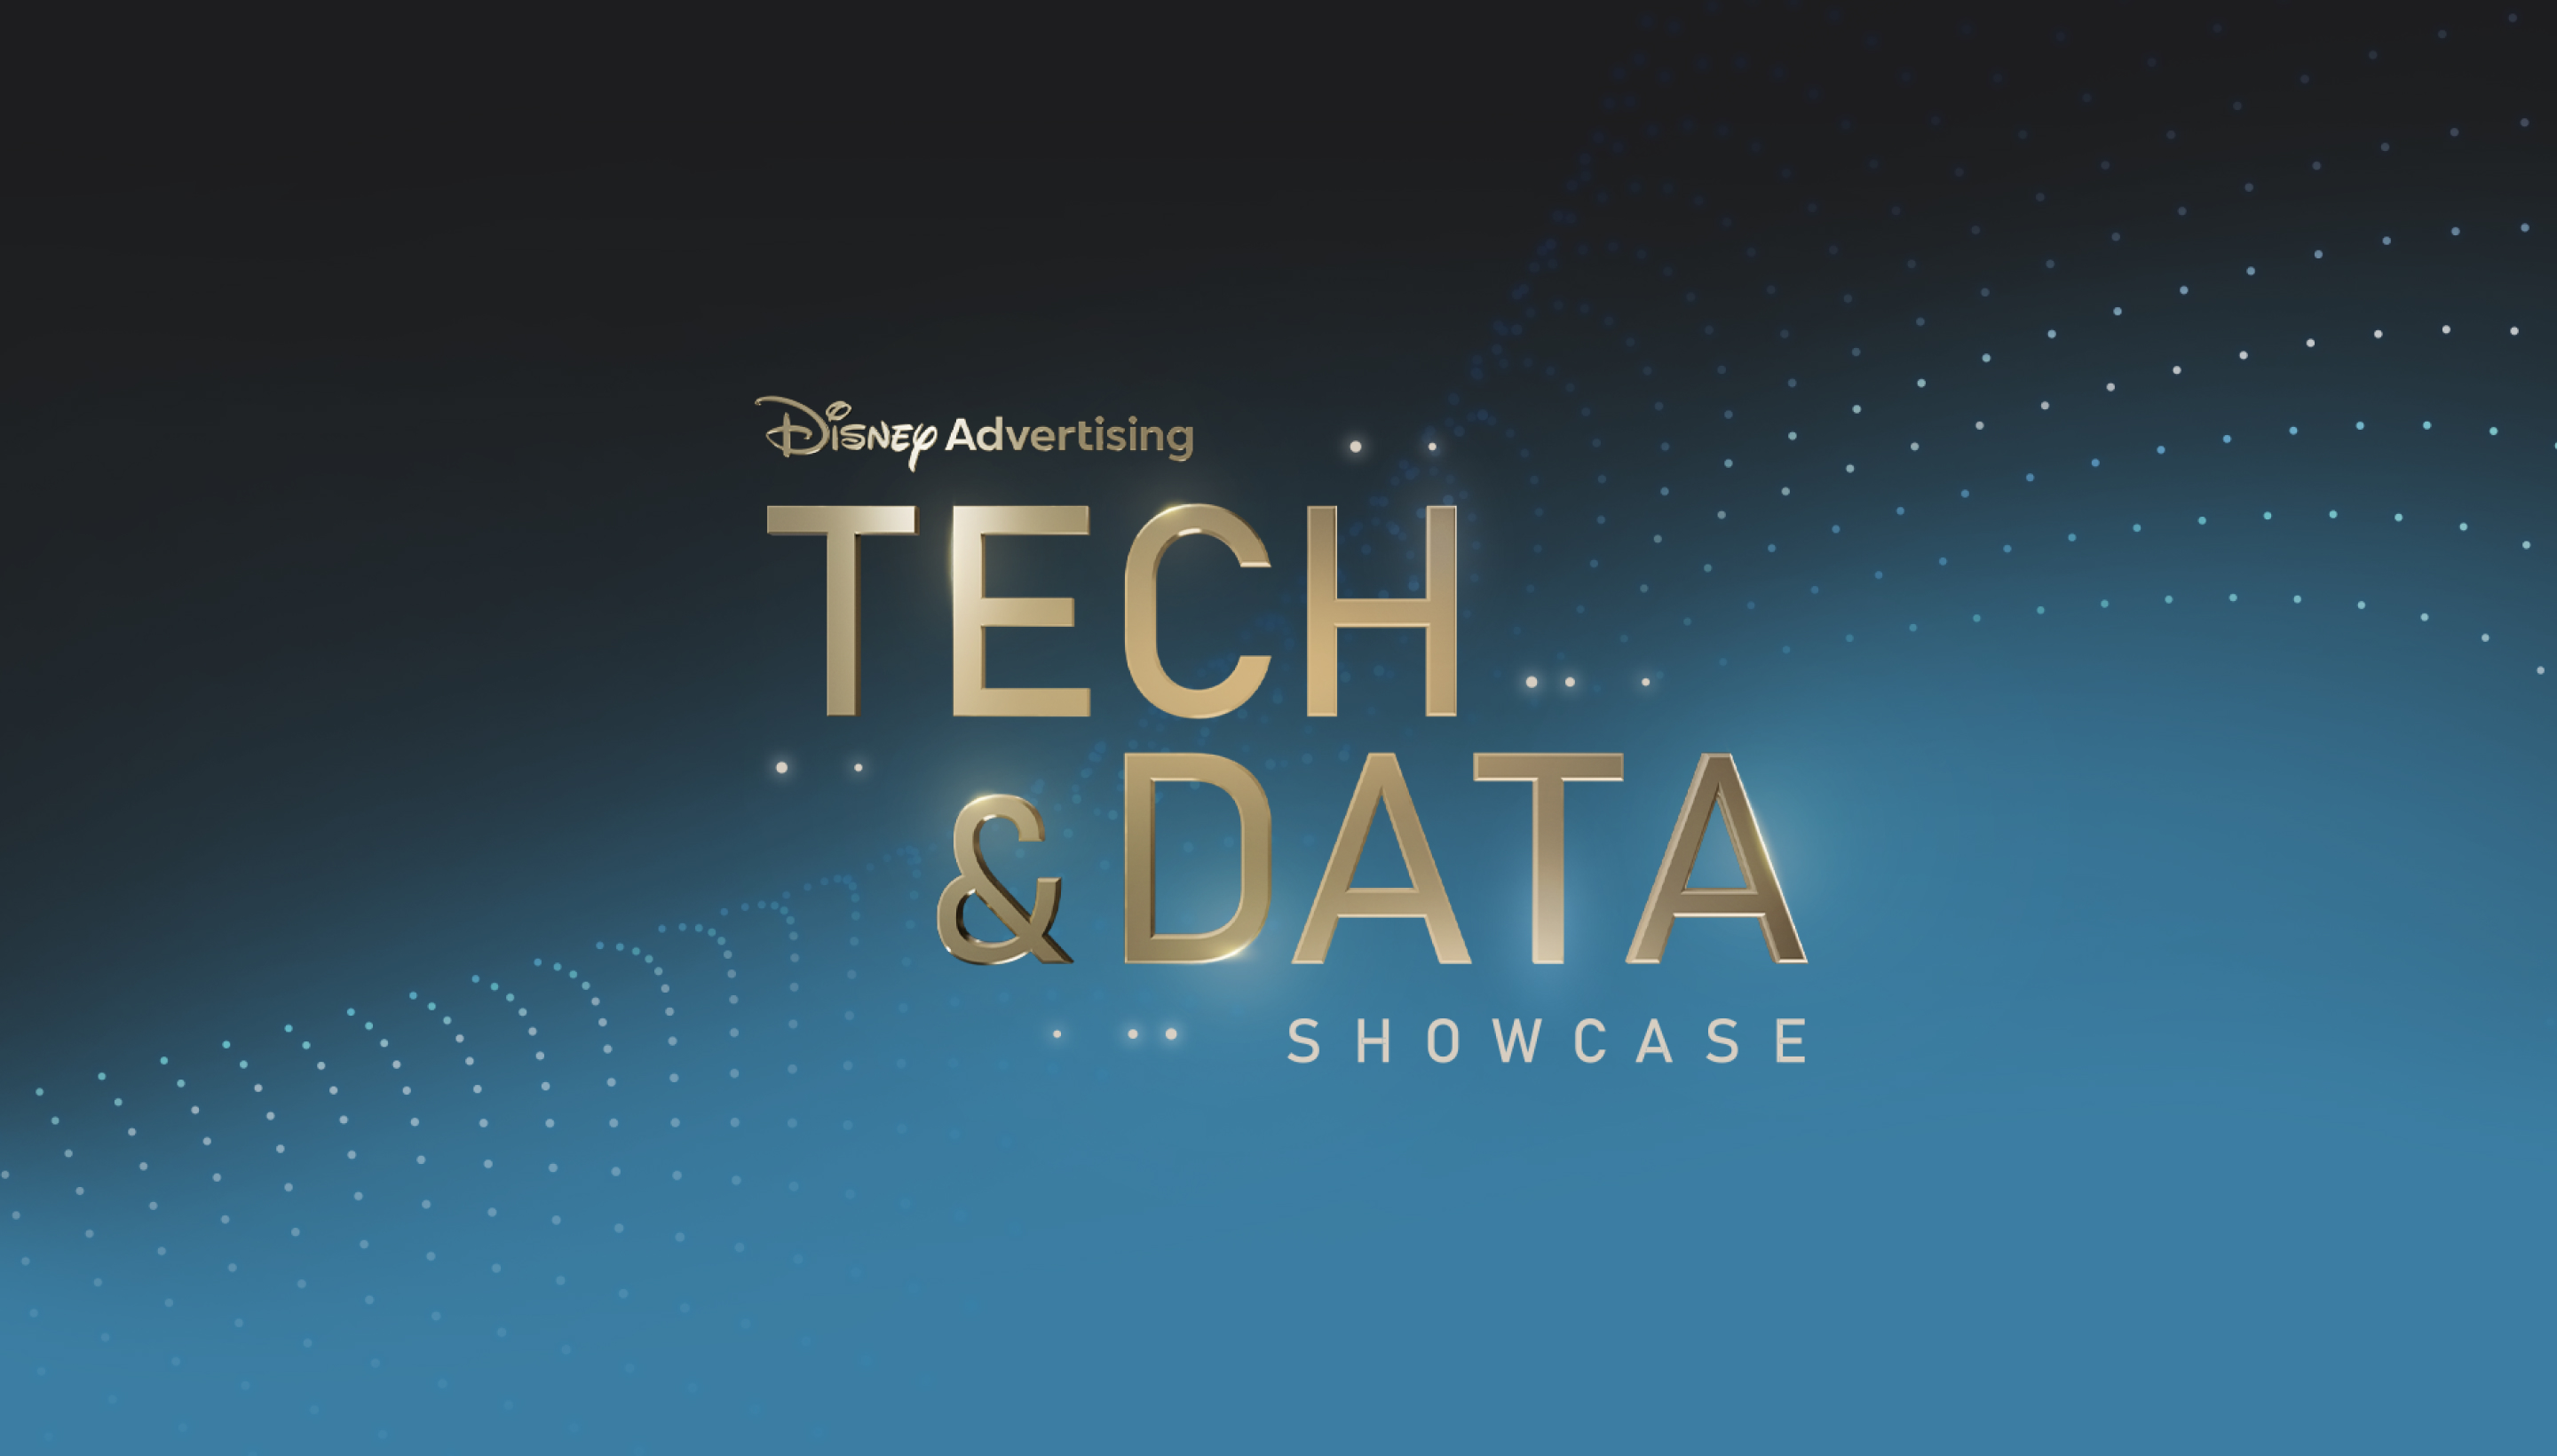 Disney Advertising Tech & Data Showcase